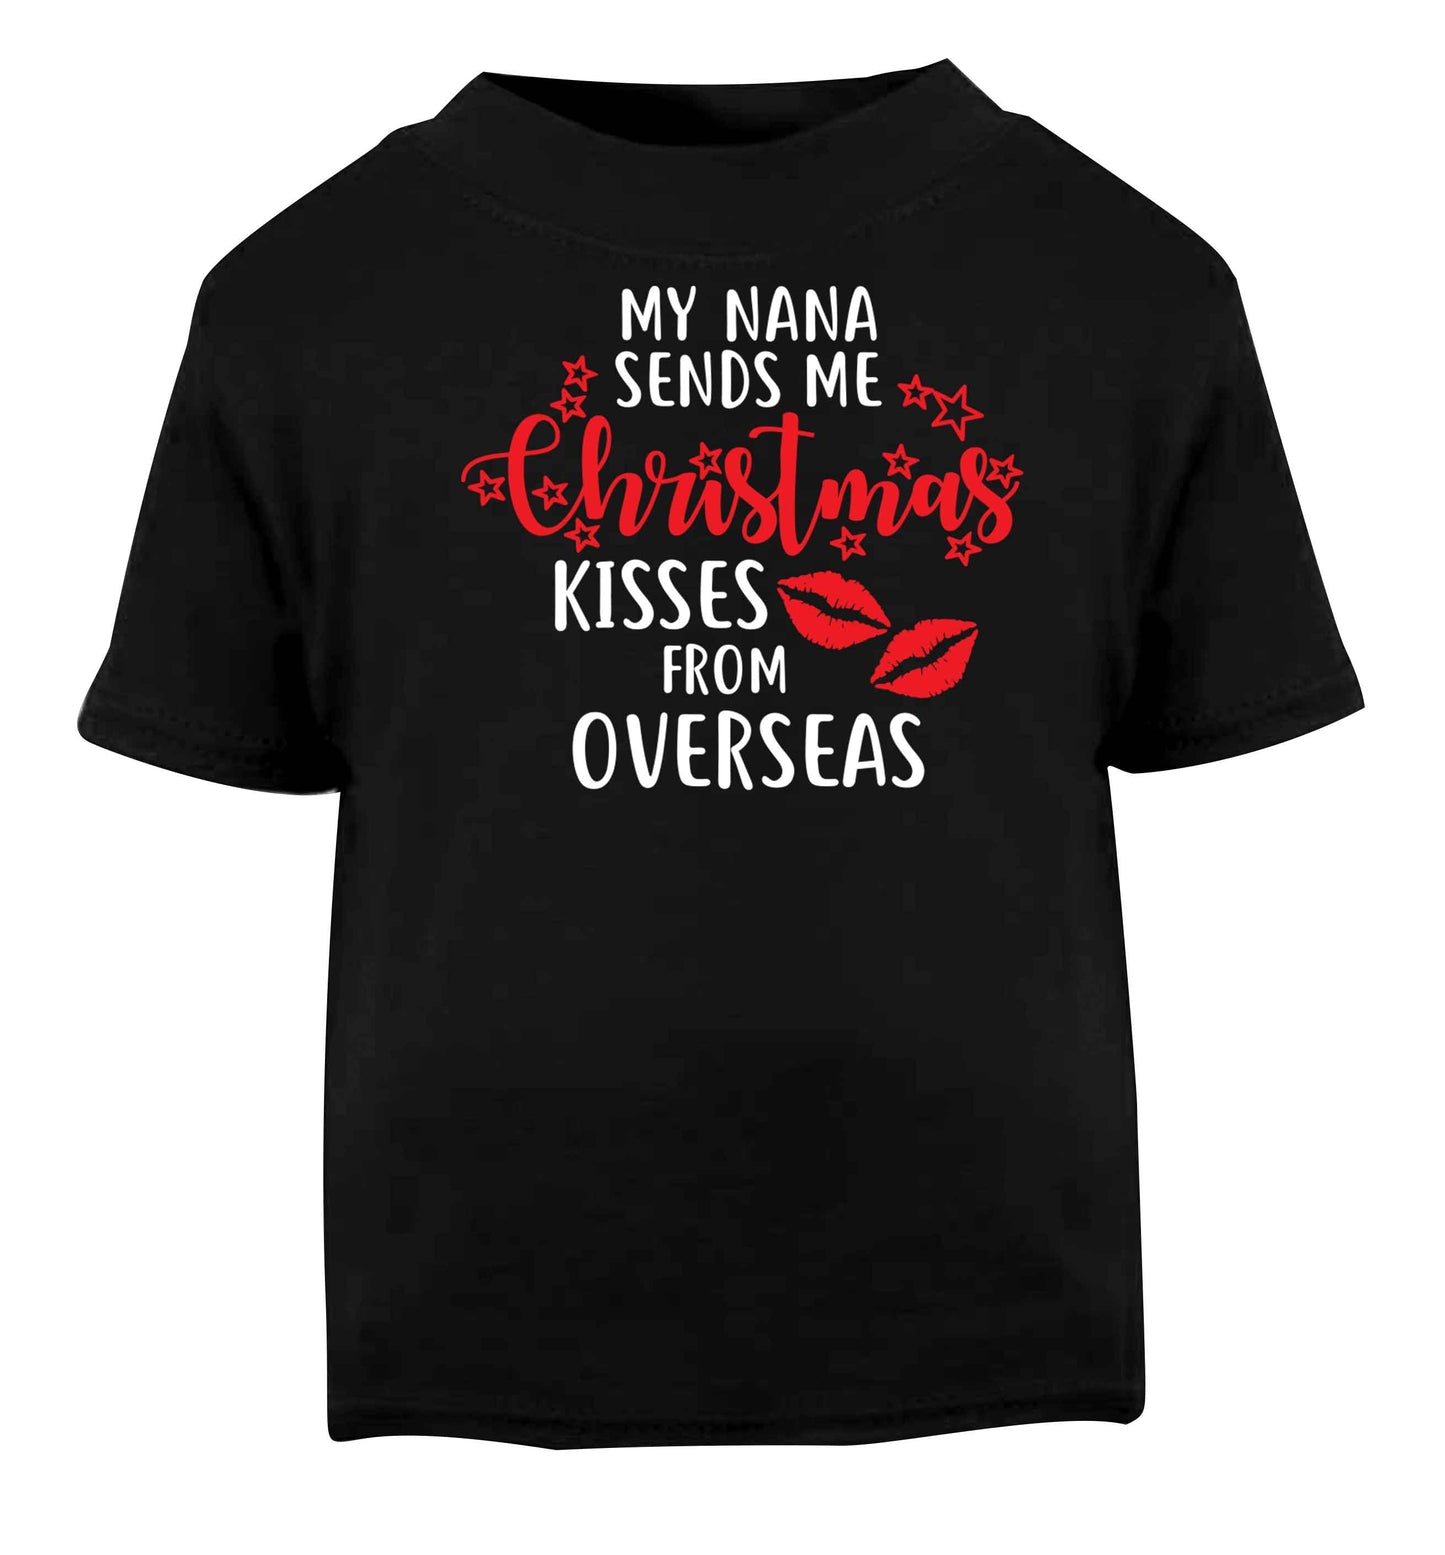 Grandma Christmas Kisses Overseas Black baby toddler Tshirt 2 years